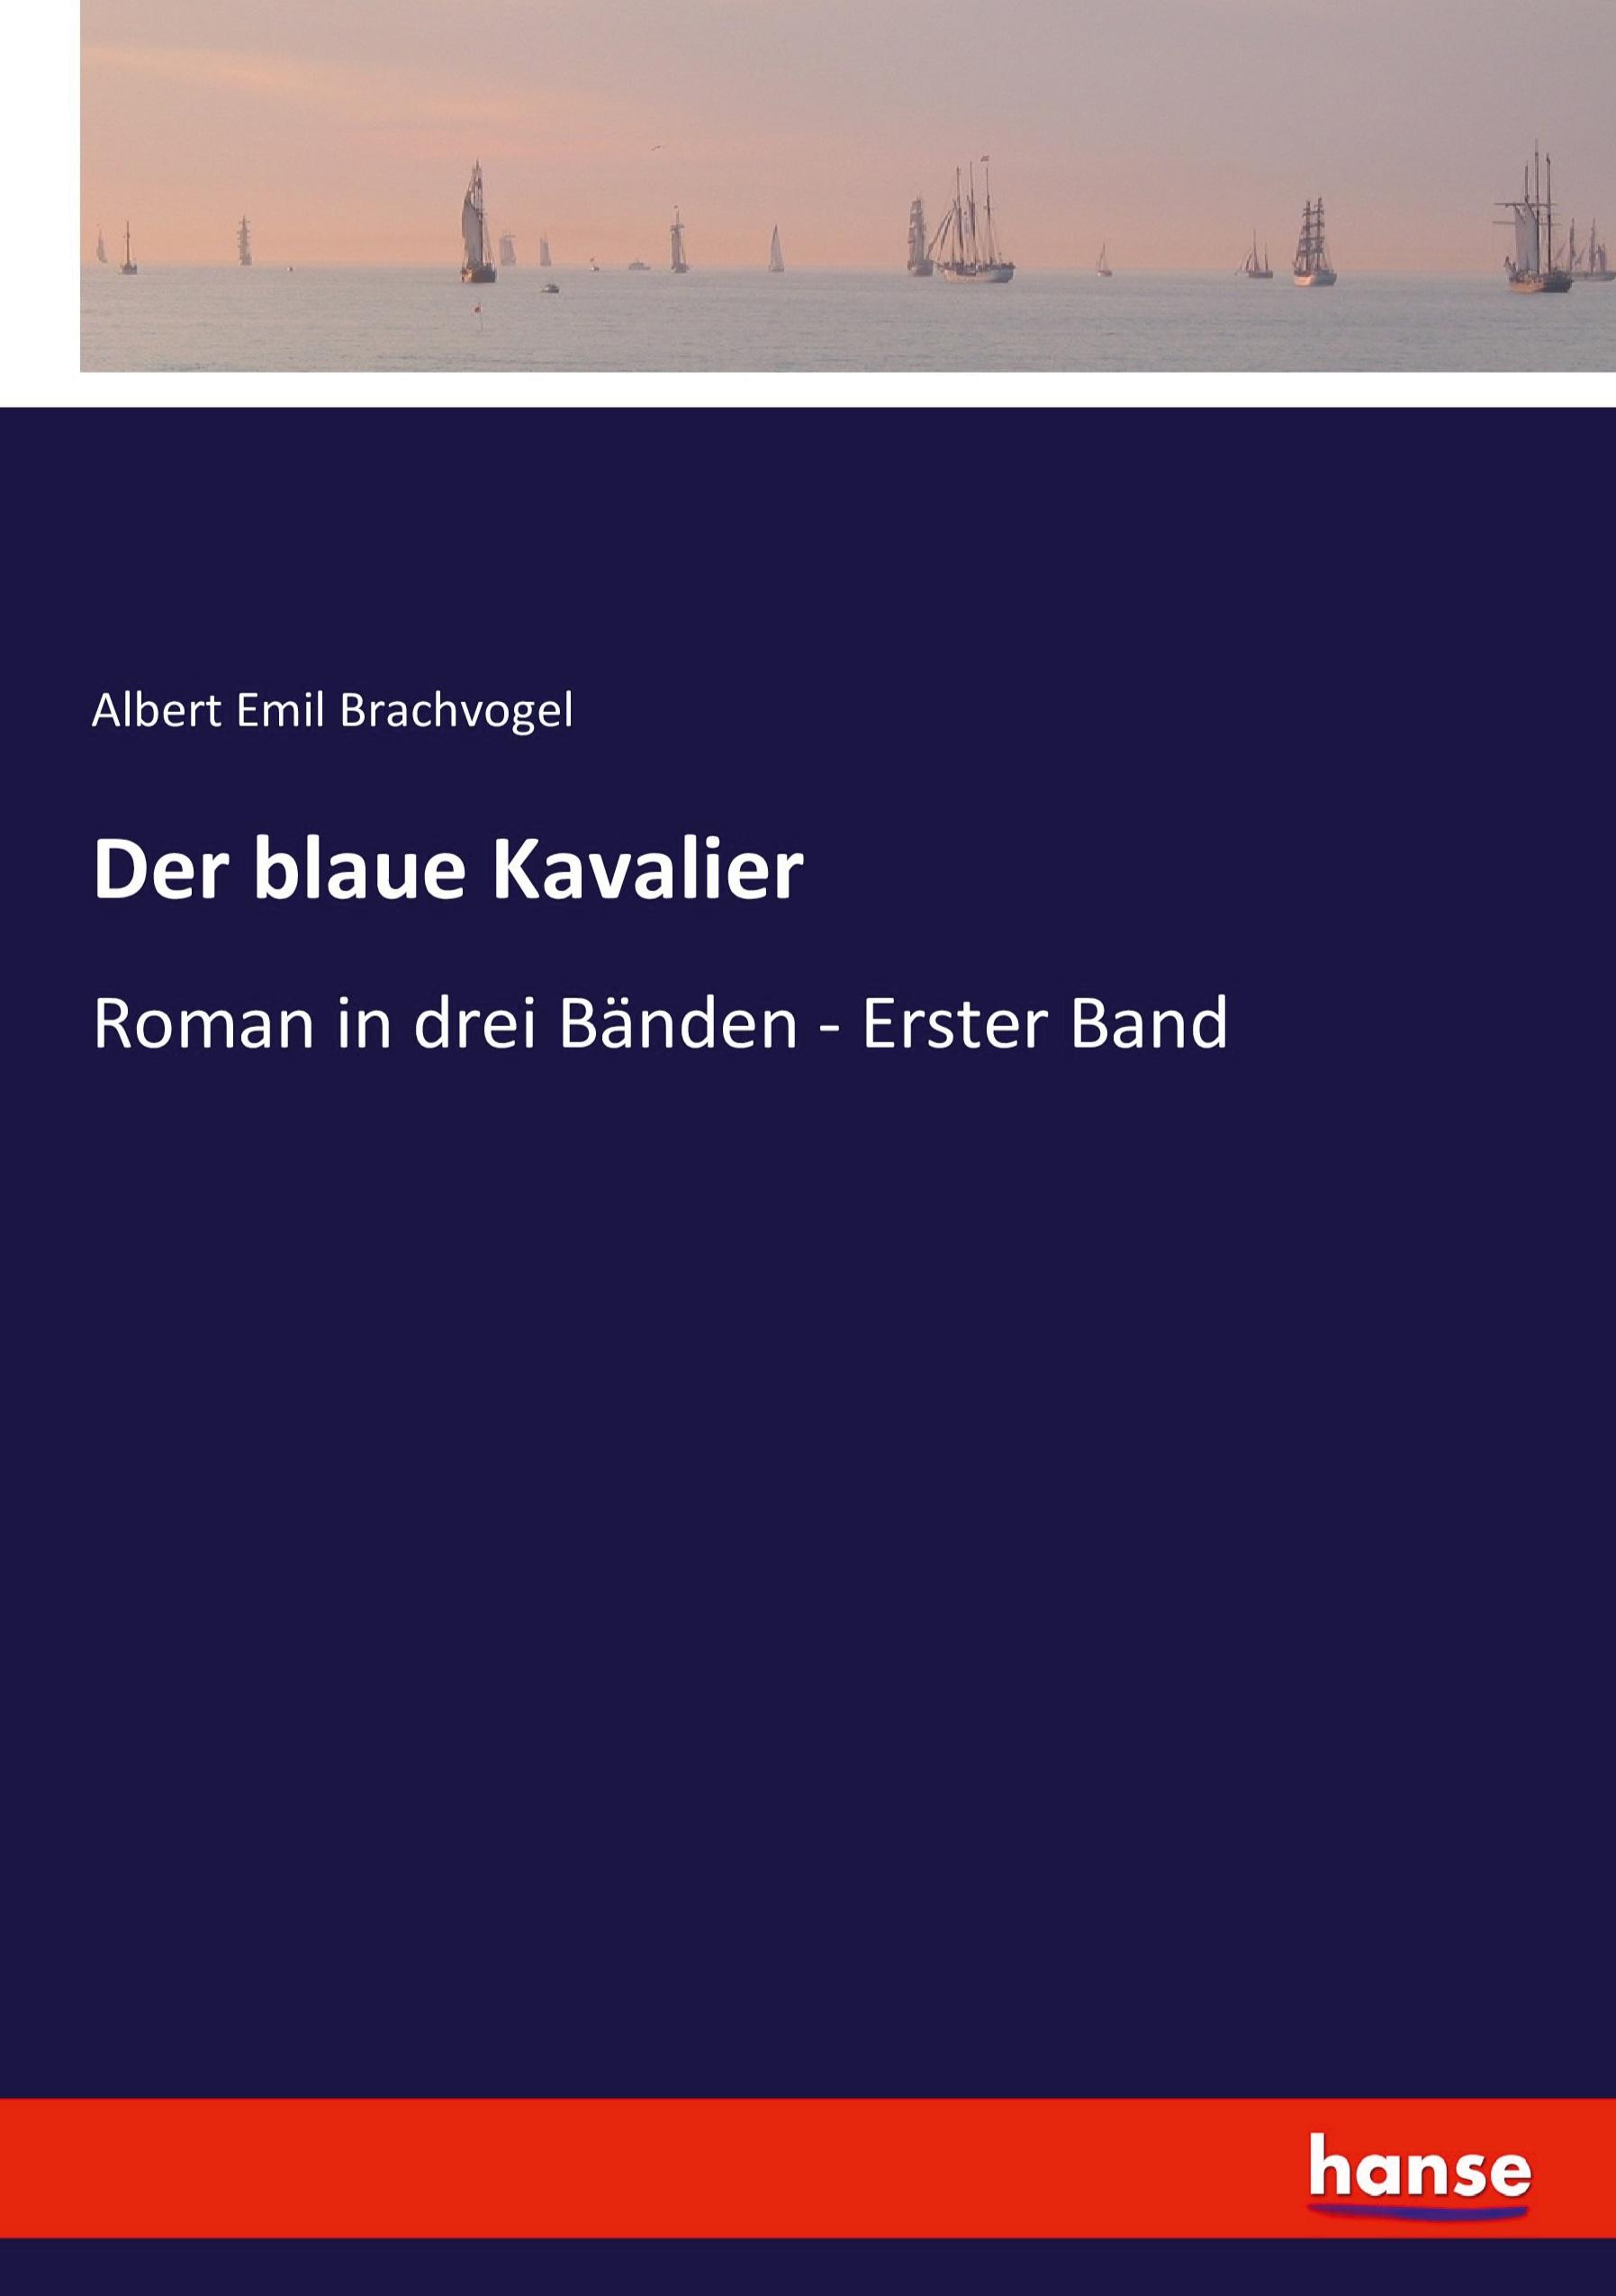 Der blaue Kavalier - Brachvogel, Albert Emil